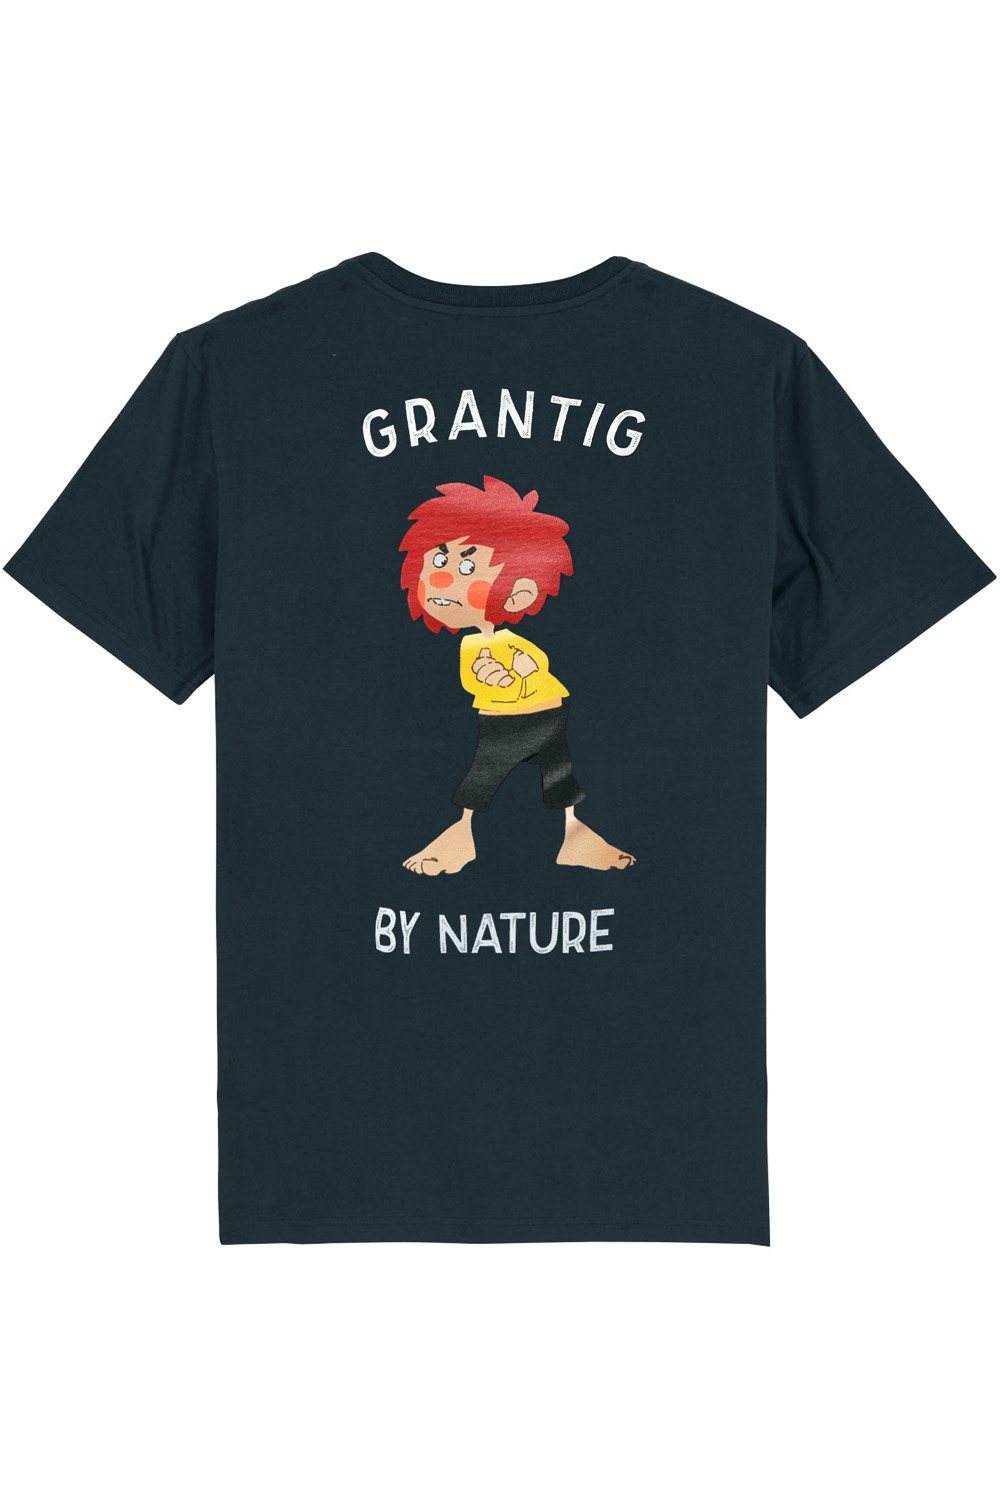 Bavarian Caps T-Shirt "Grantig by nature"